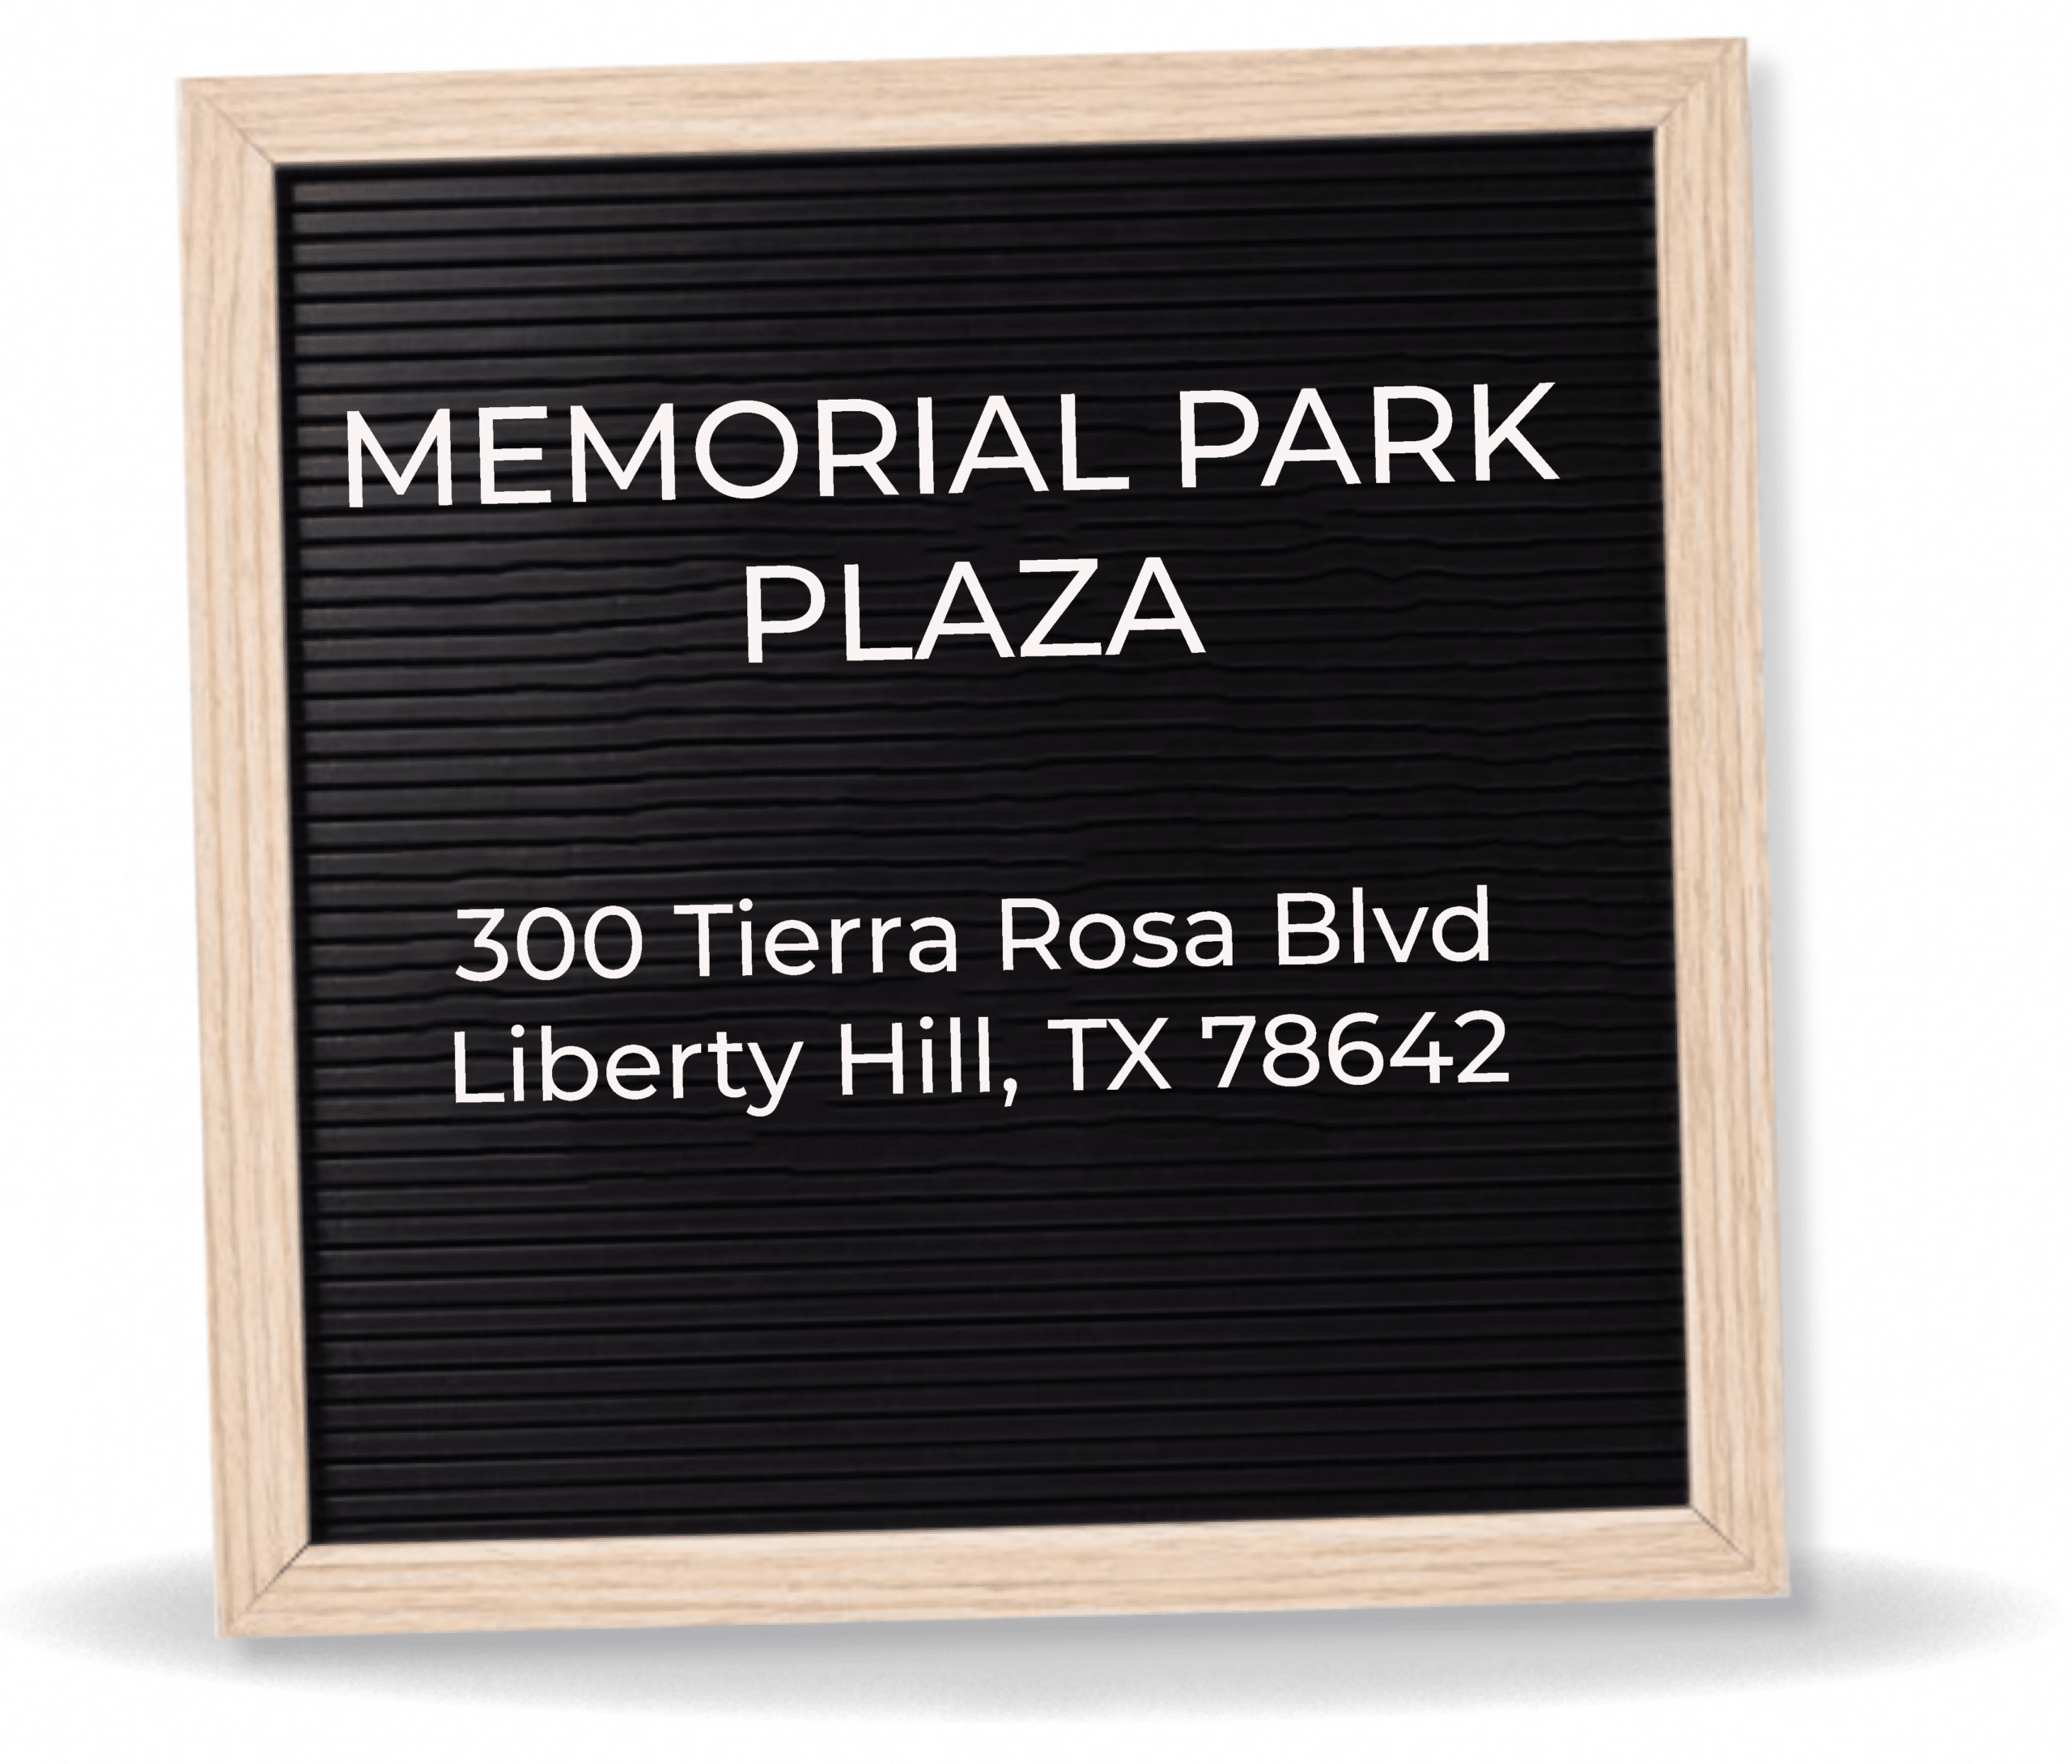 Memorial Park Plaza address